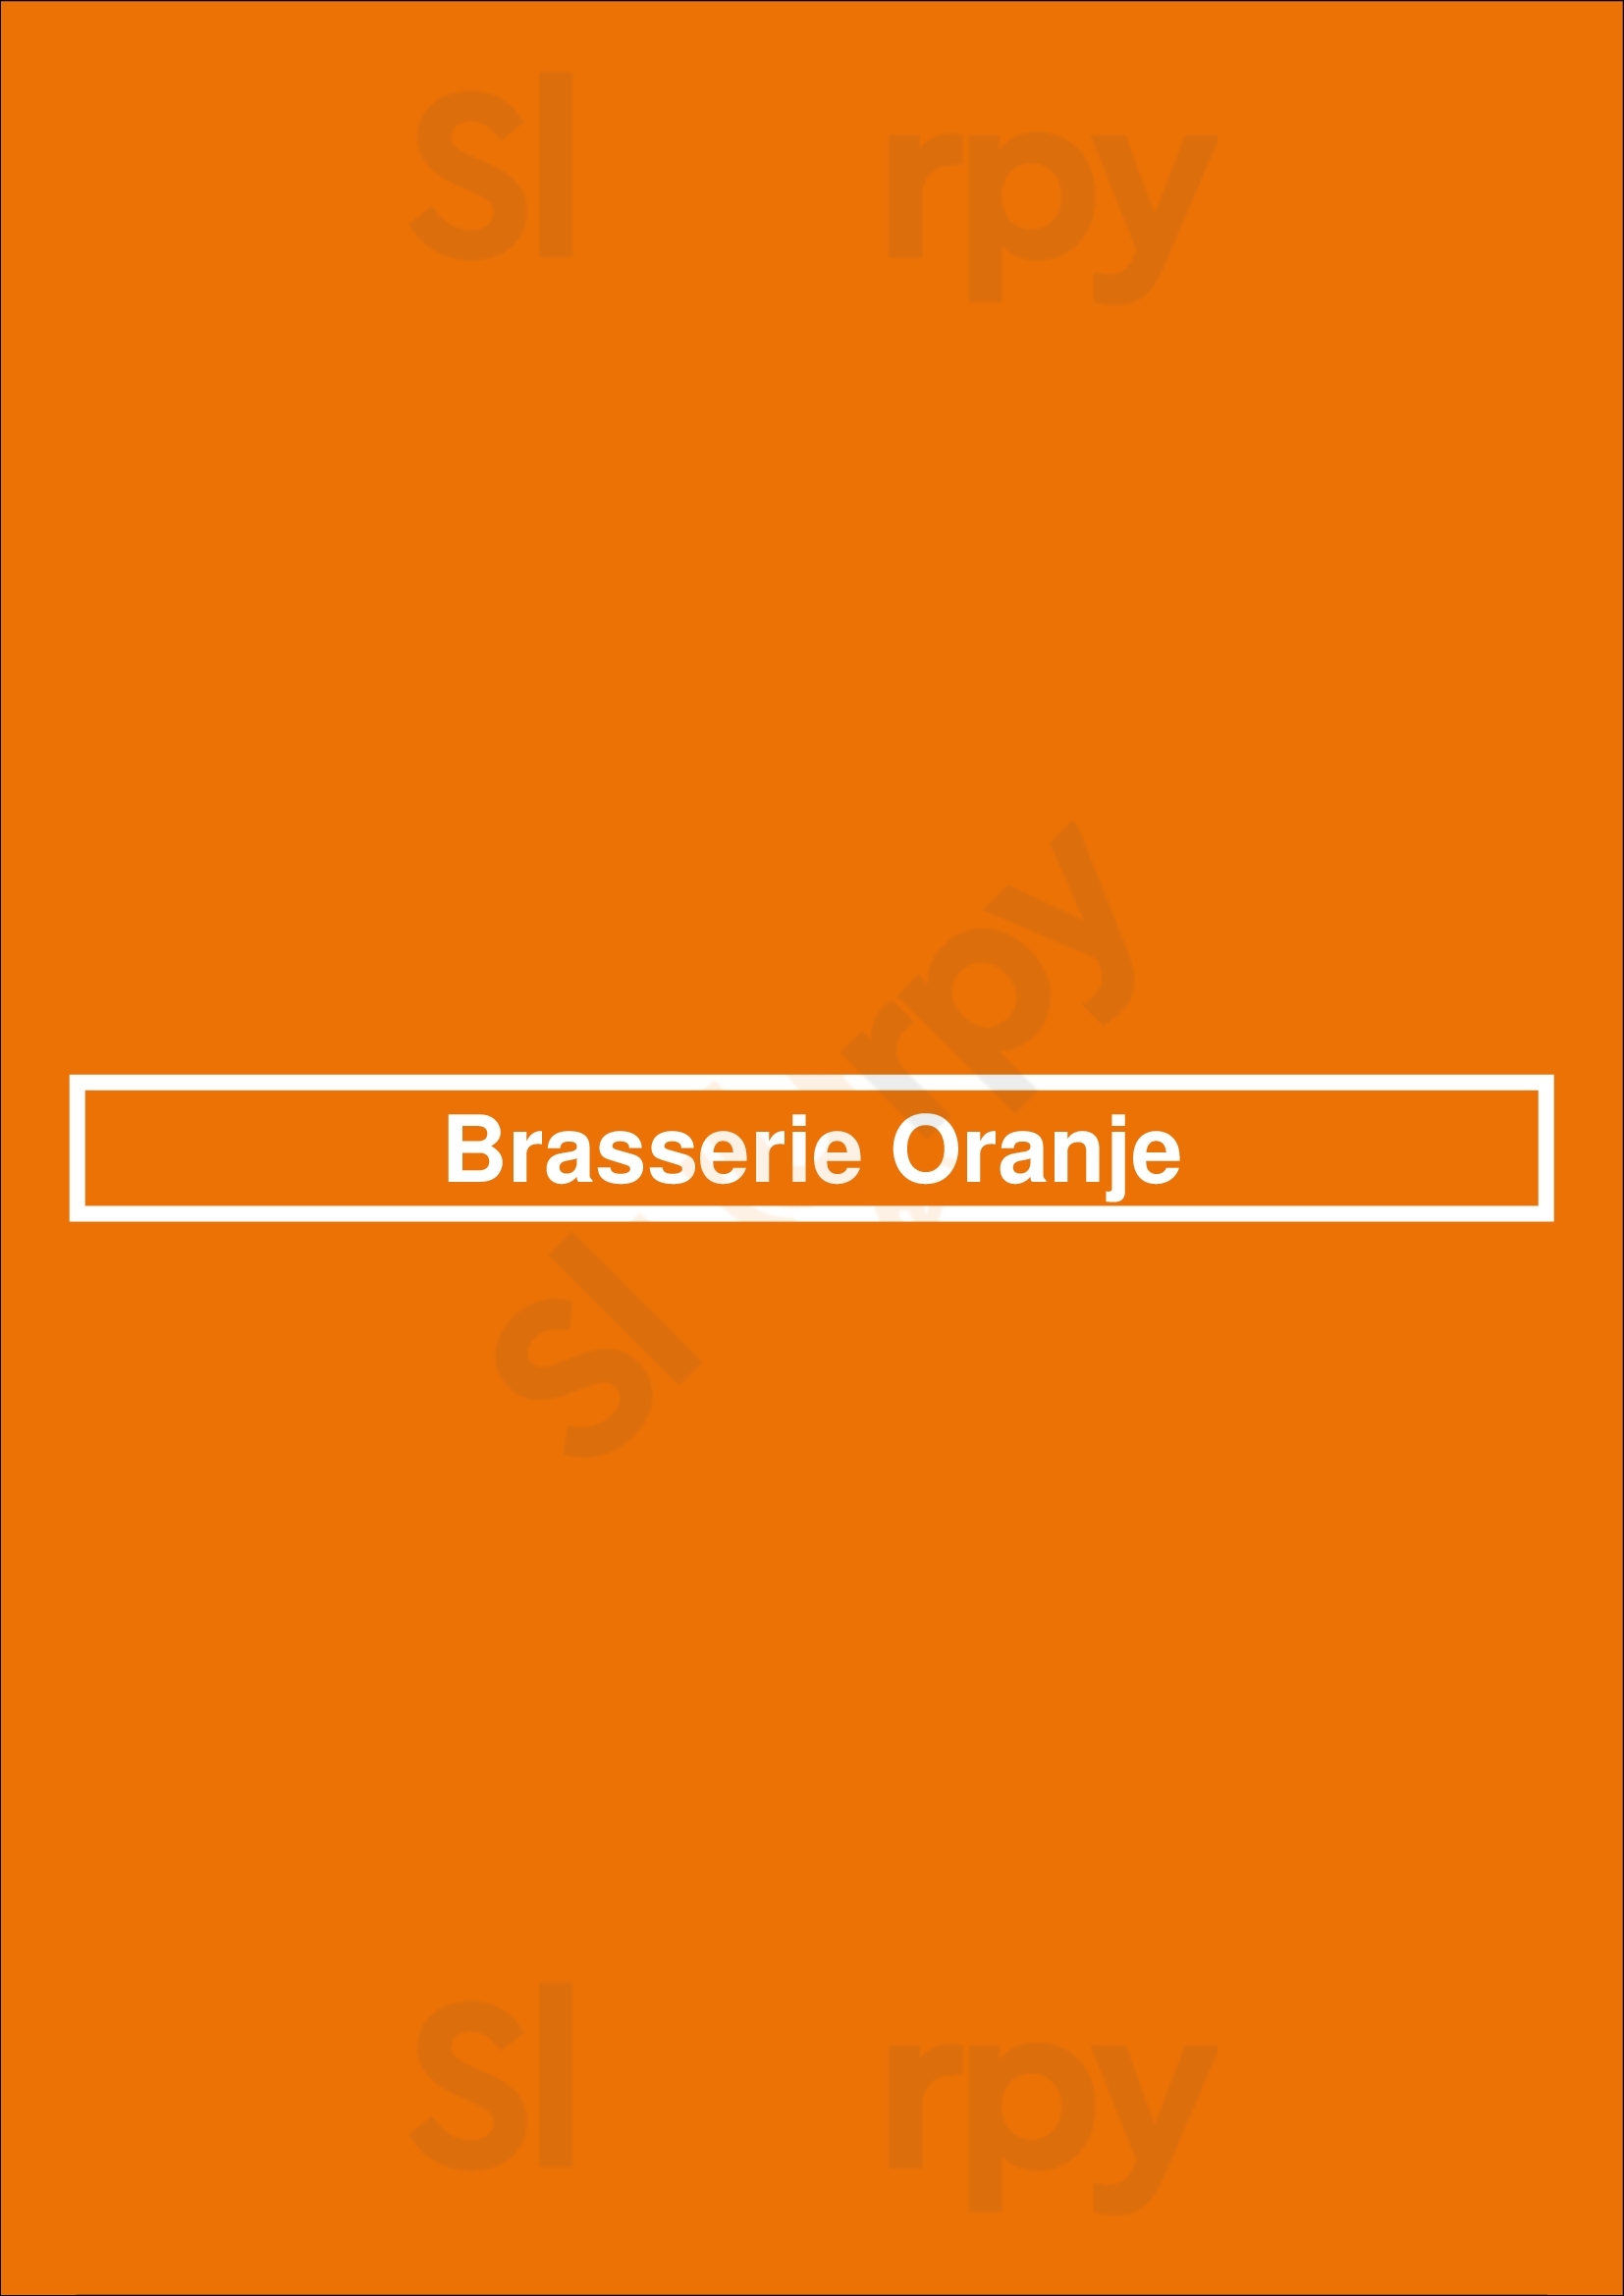 Brasserie Oranje Leeuwarden Menu - 1